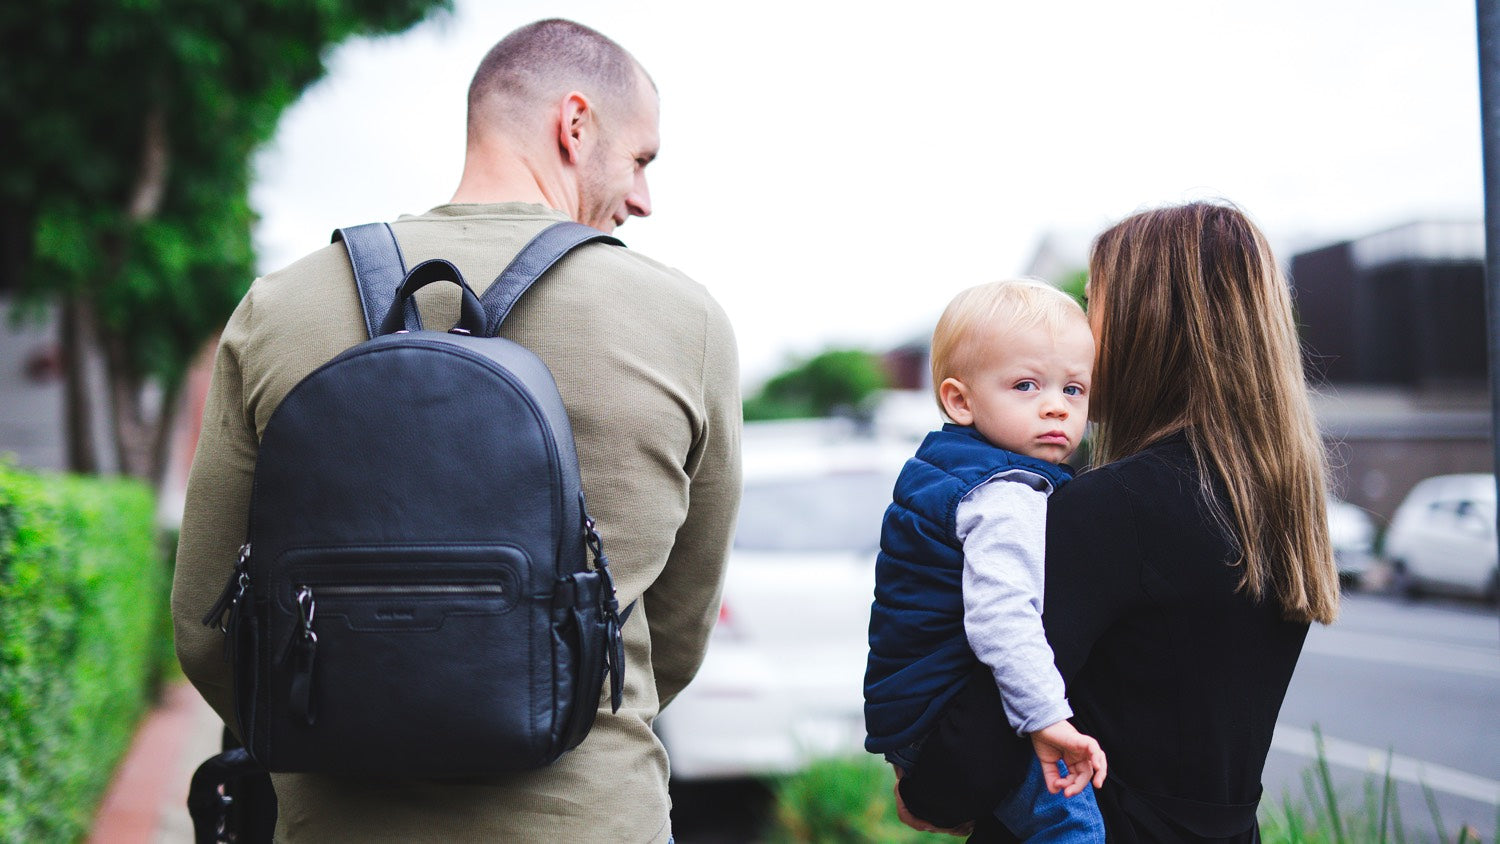 ONE NINE Interviews - Luke and Tygar with mum carrying child